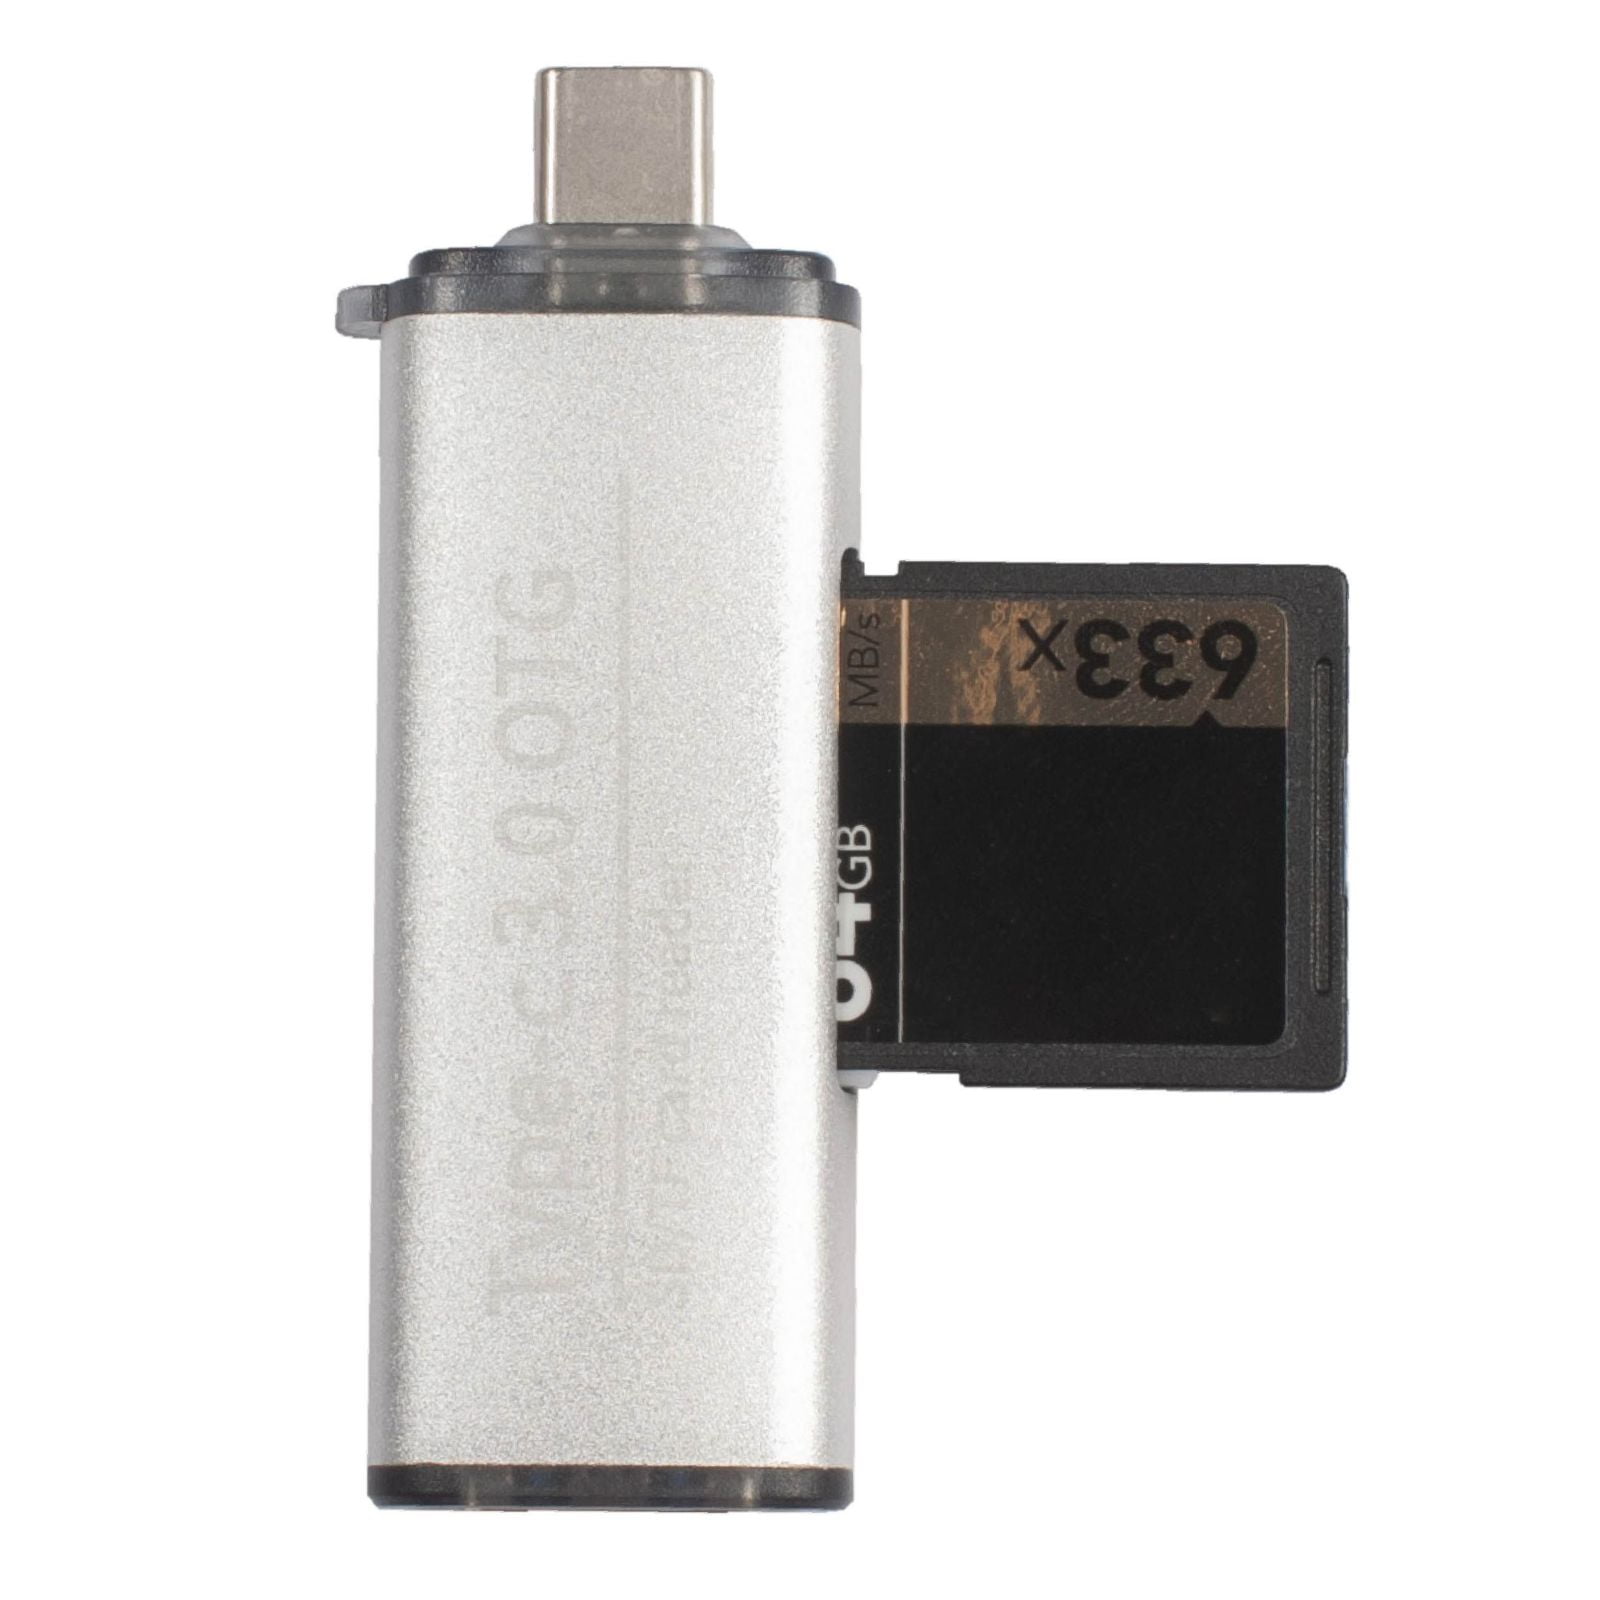 SD Card Reader, USB C Memory Card Reader with USB Hub 3.0 Speed, For SDXC, SDHC, SD, Micro SD, Fast Reader / Writer, Aluminium Silver - Walmart.com